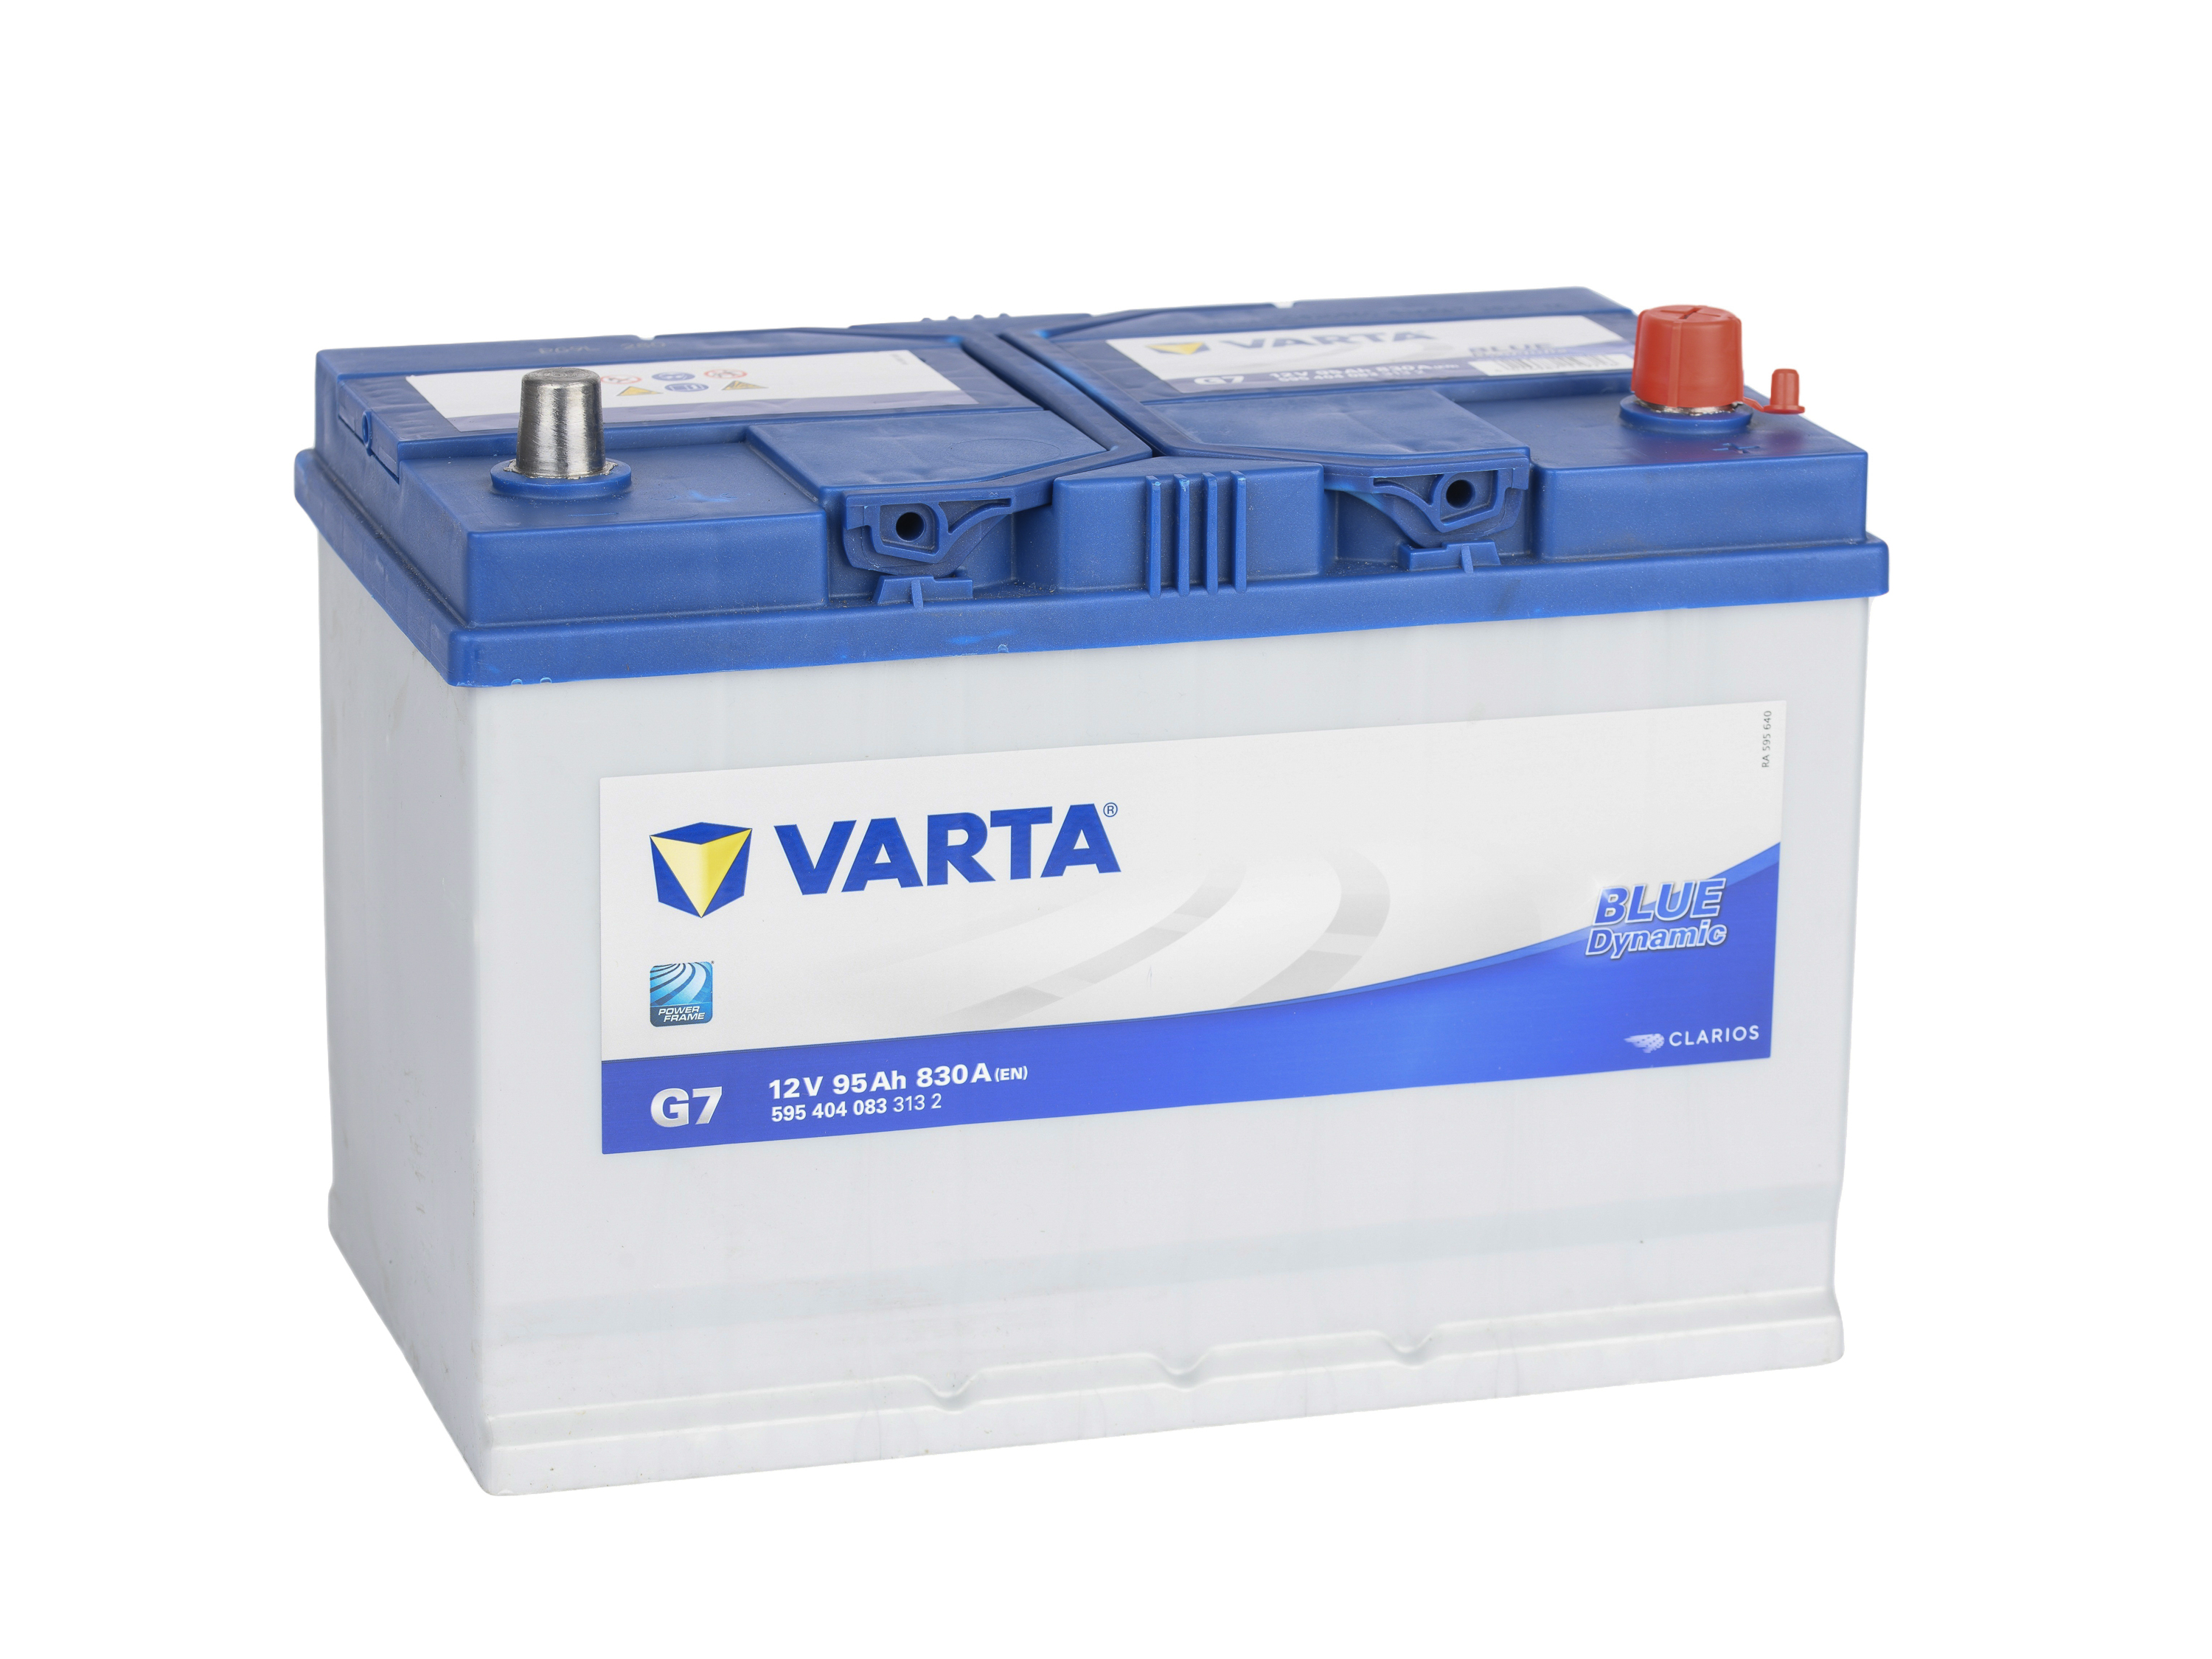 VARTA Batteri Blue Dynamic G7 595.404.083 12 V / 95 Ah